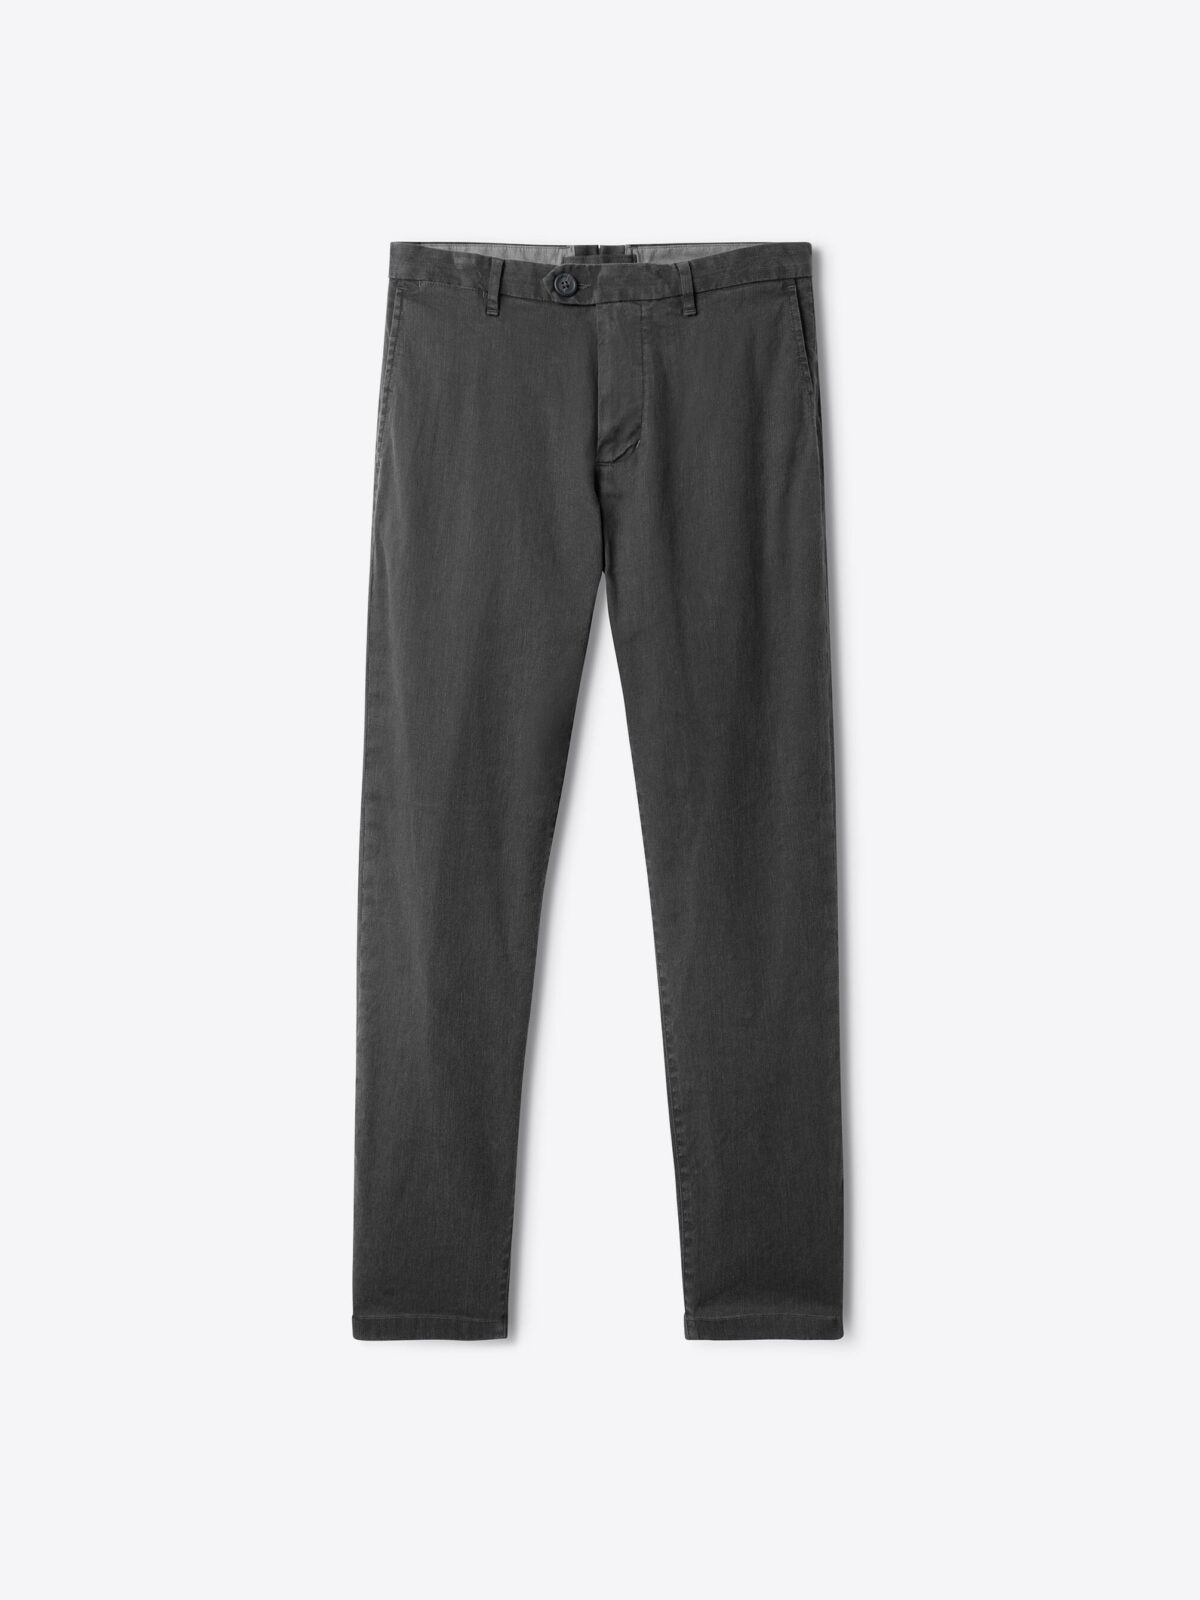 Bergamo Faded Black Cotton and Linen Stretch Chino - Custom Fit Pants